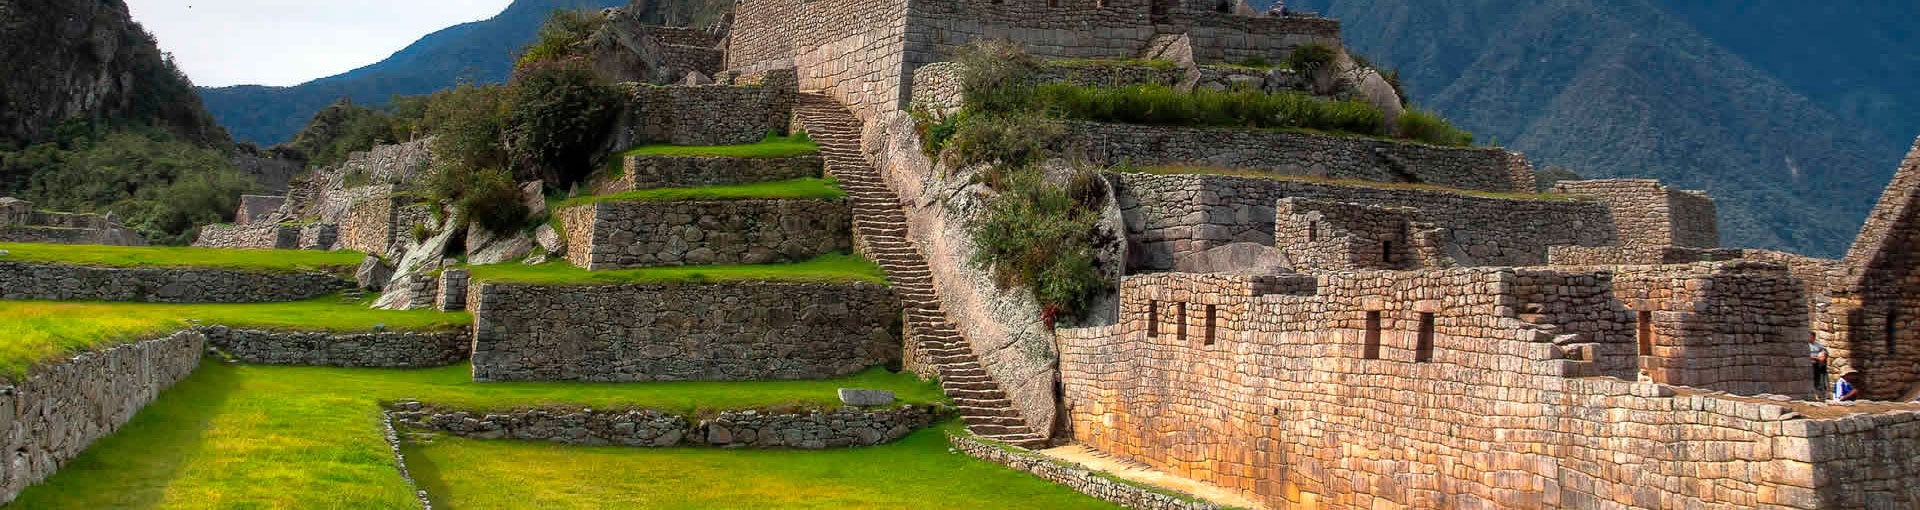 Impressive Inca walls of Machu Picchu